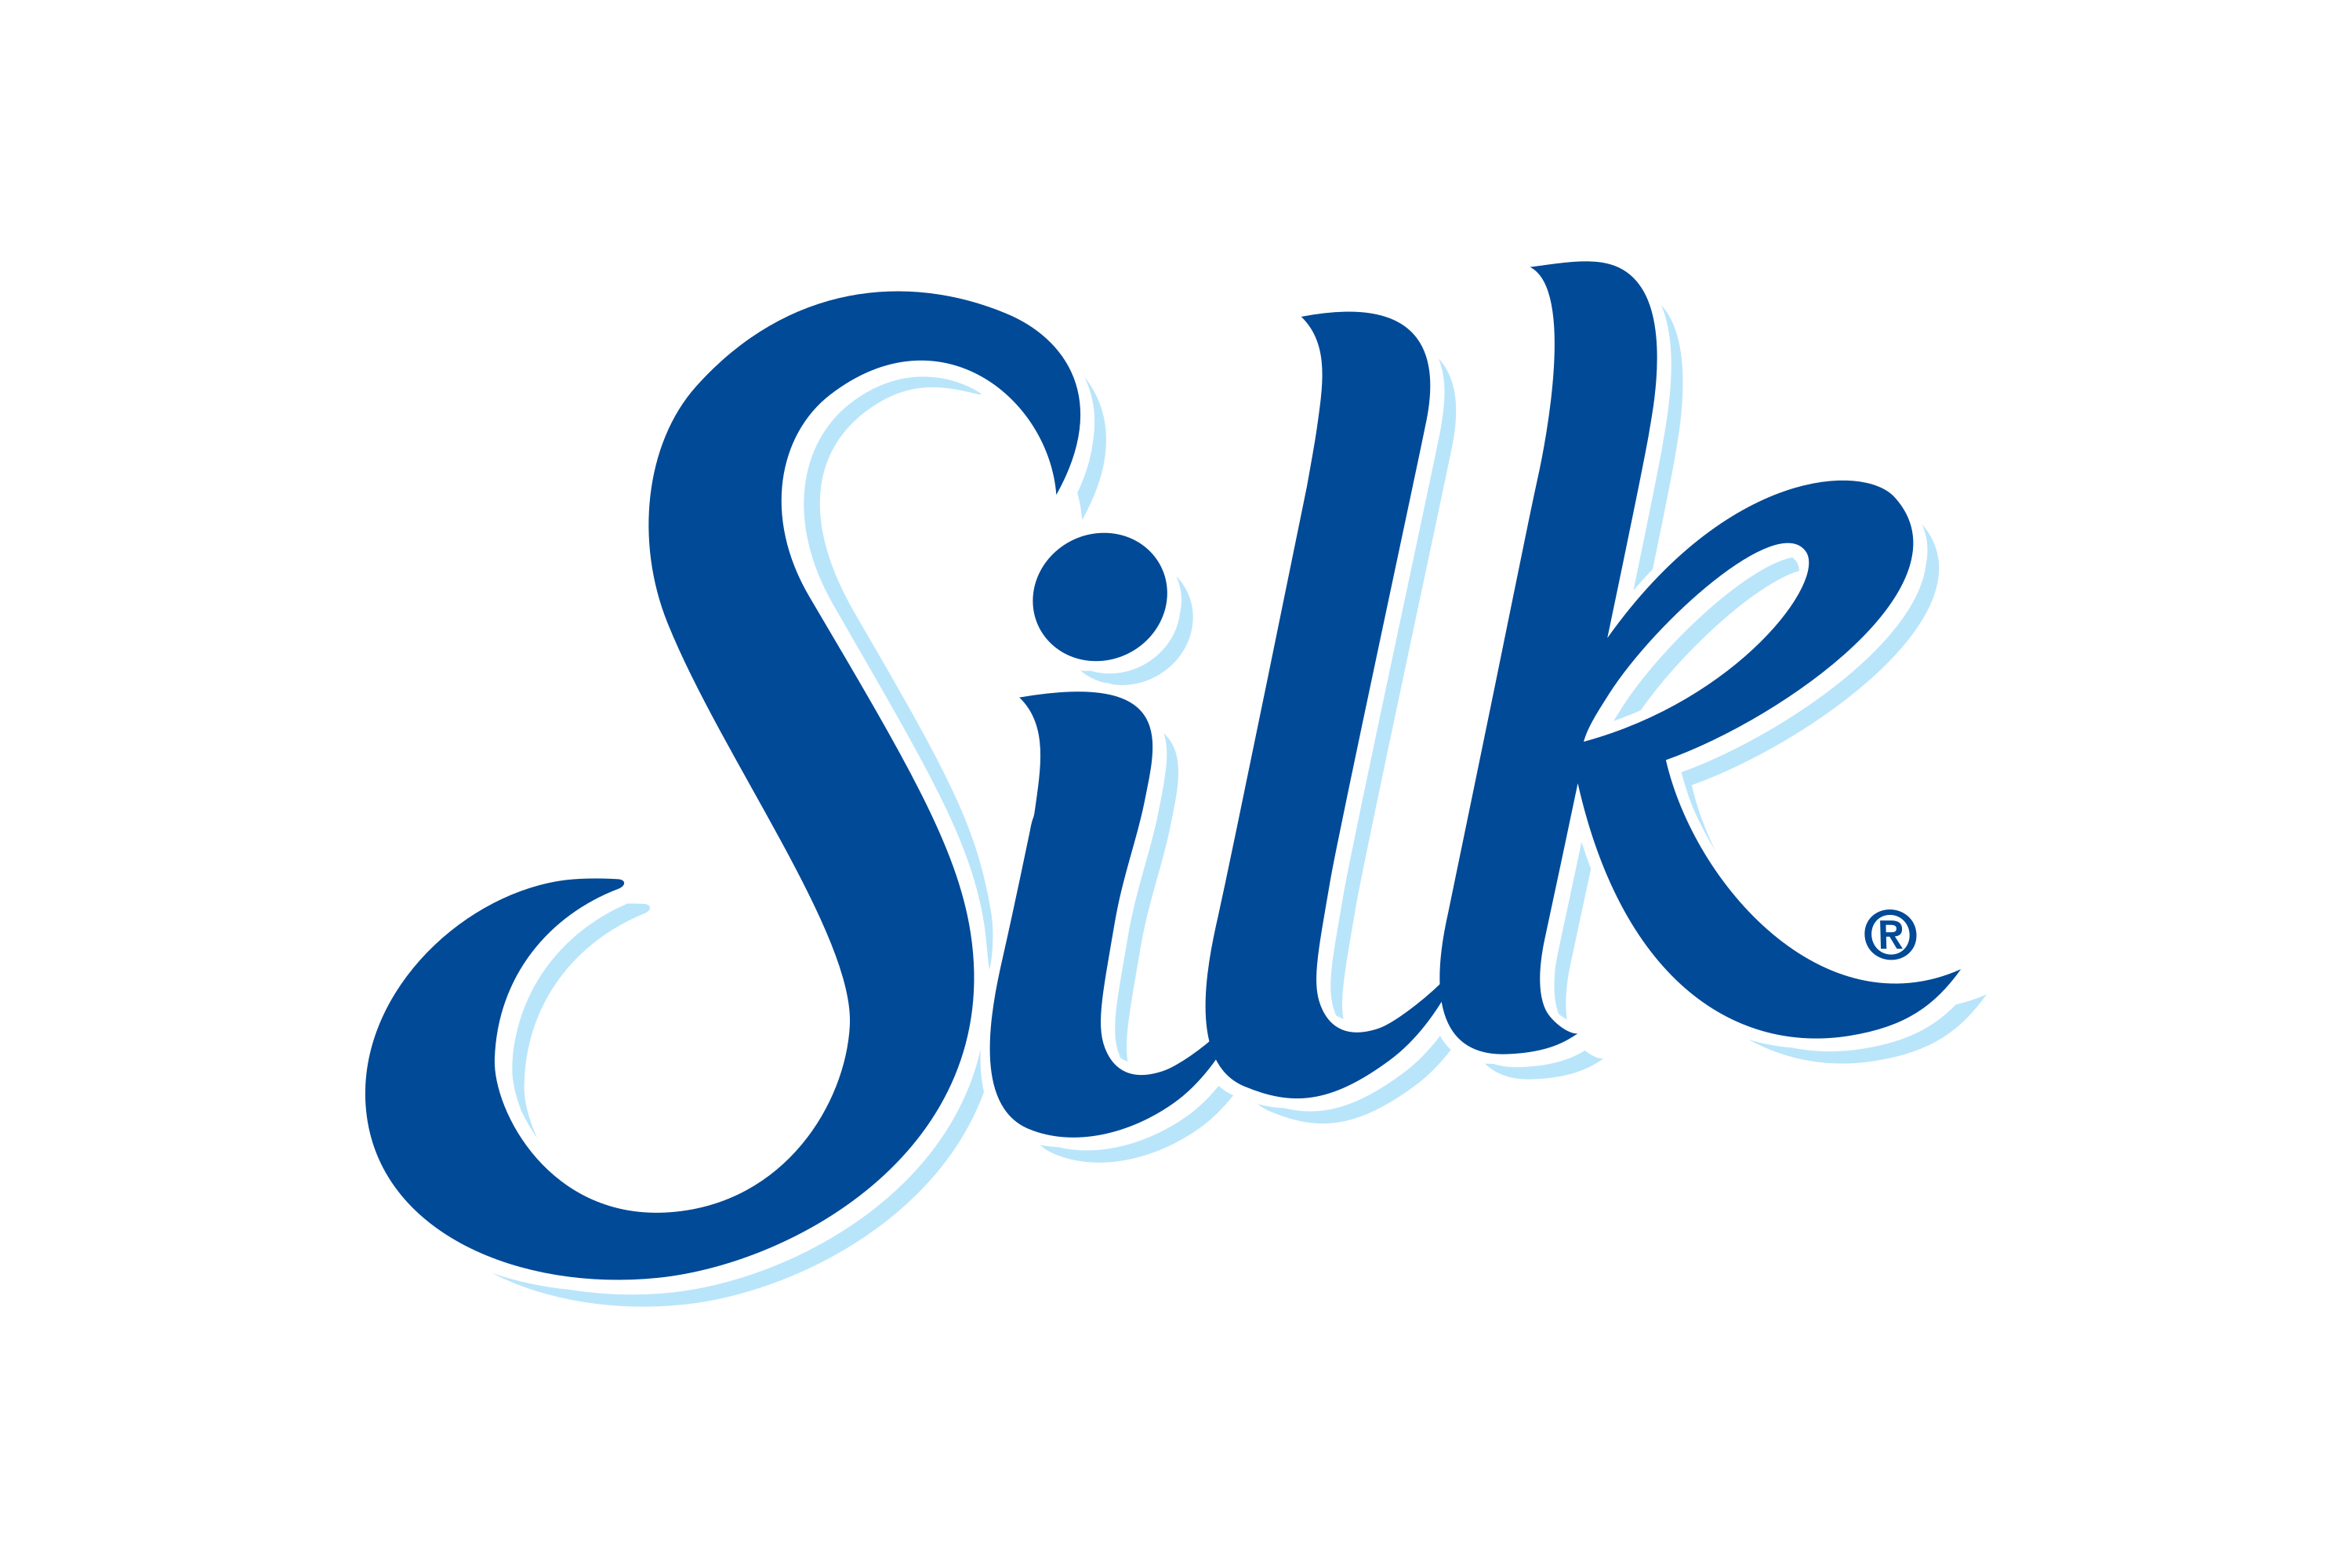 Download Silk Logo in SVG Vector or PNG File Format - Logo.wine